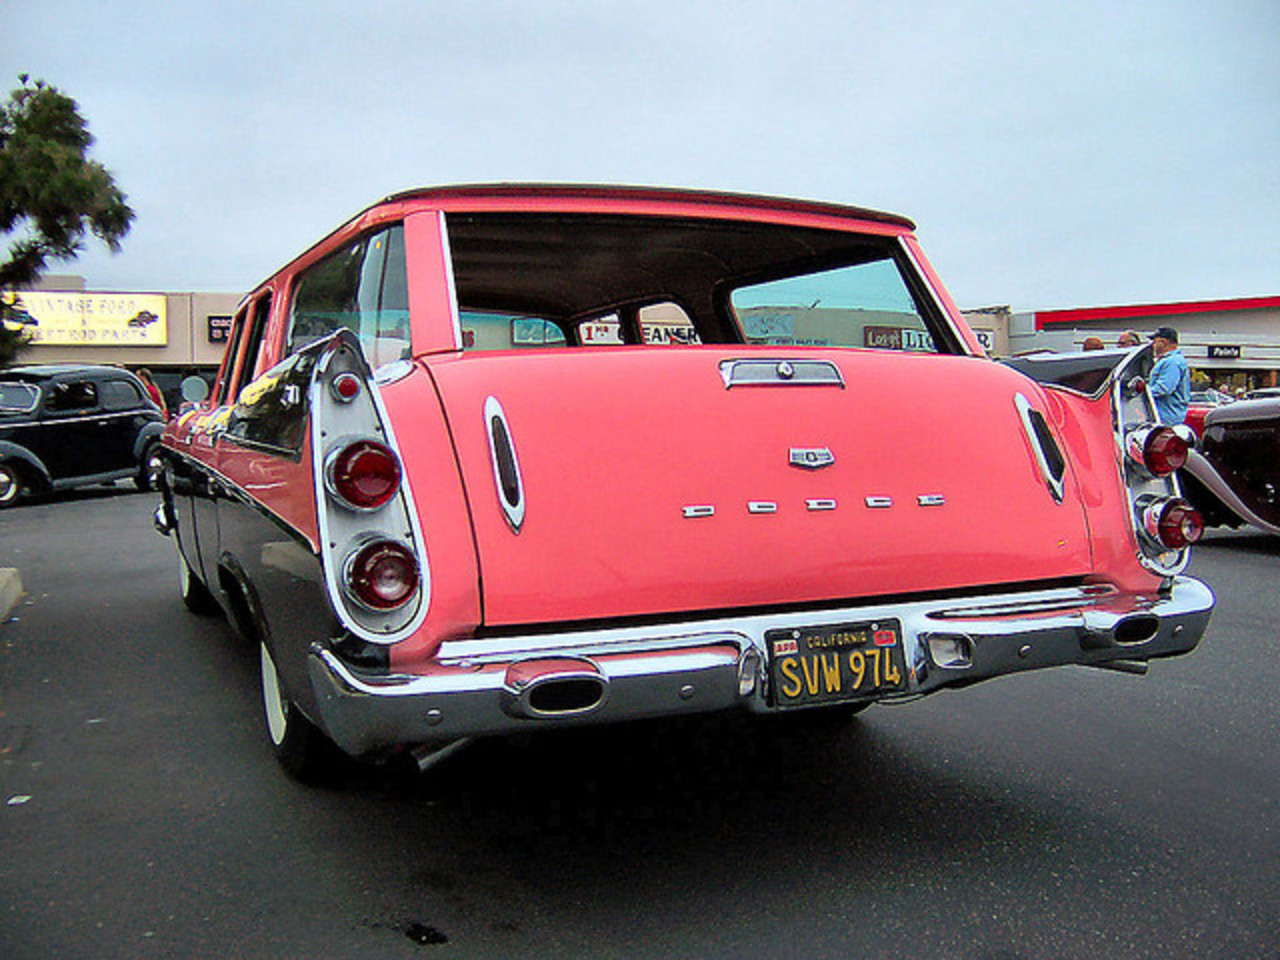 1957 Dodge Sierra Wagon rear quarter | Flickr - Photo Sharing!